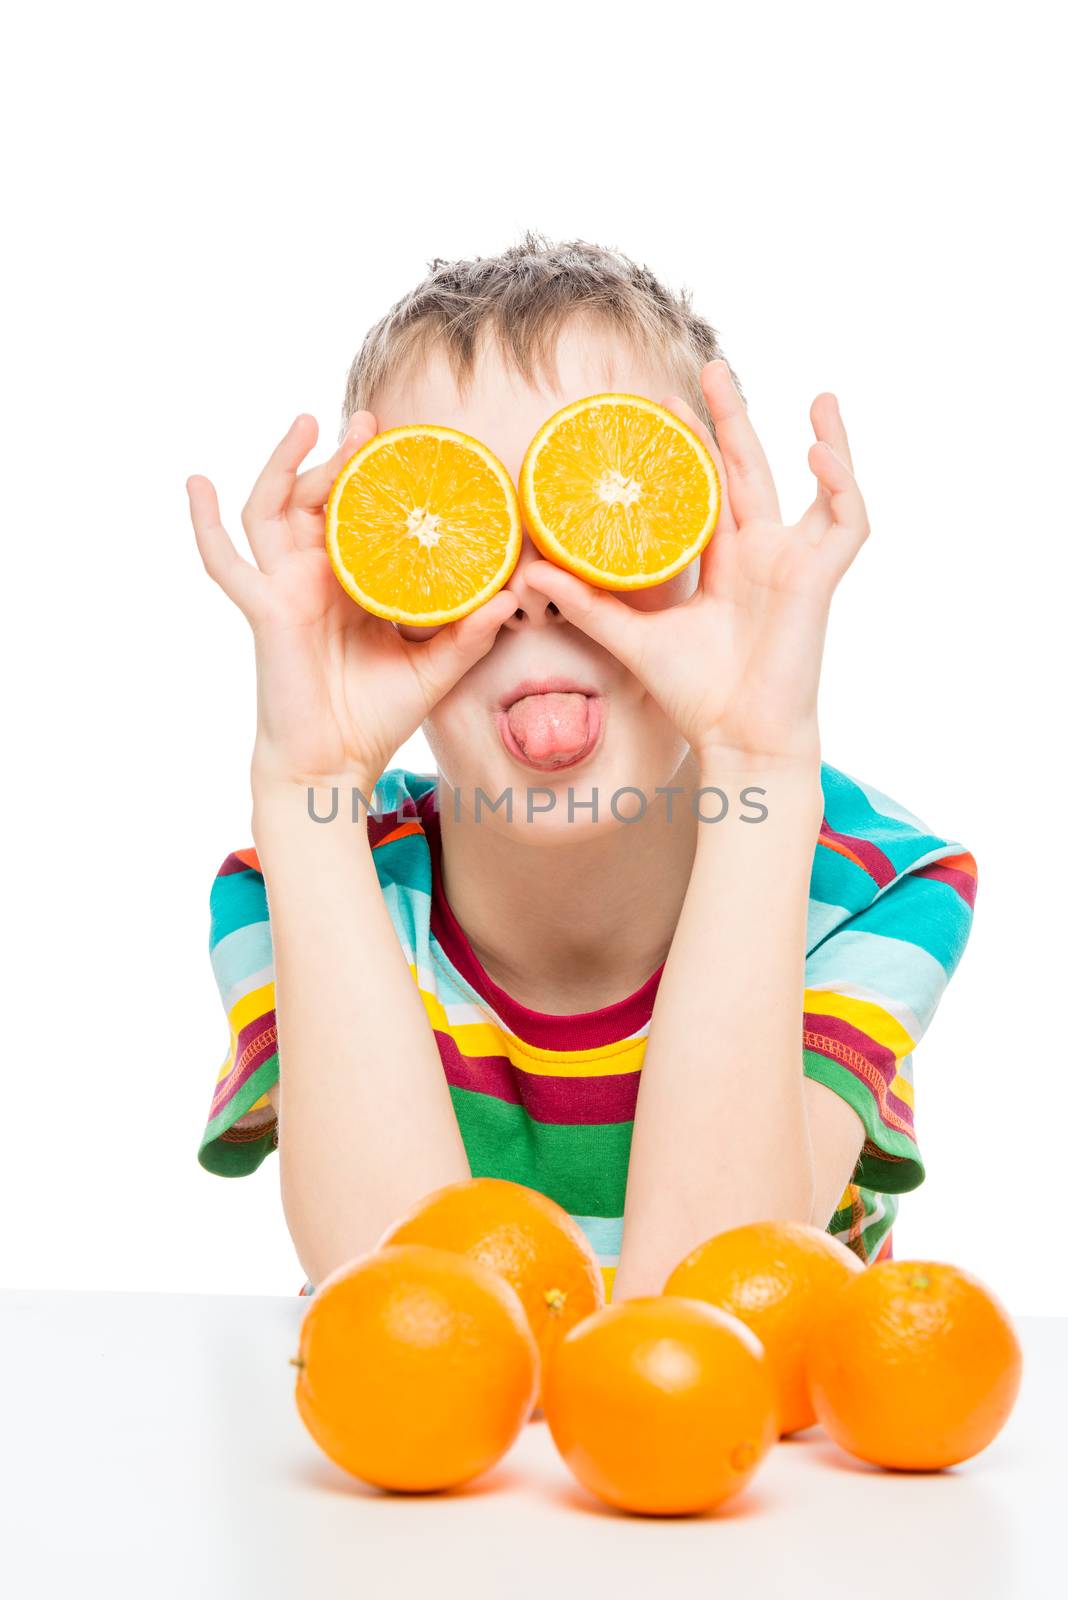 humorous photo of a boy with oranges halves on a white backgroun by kosmsos111